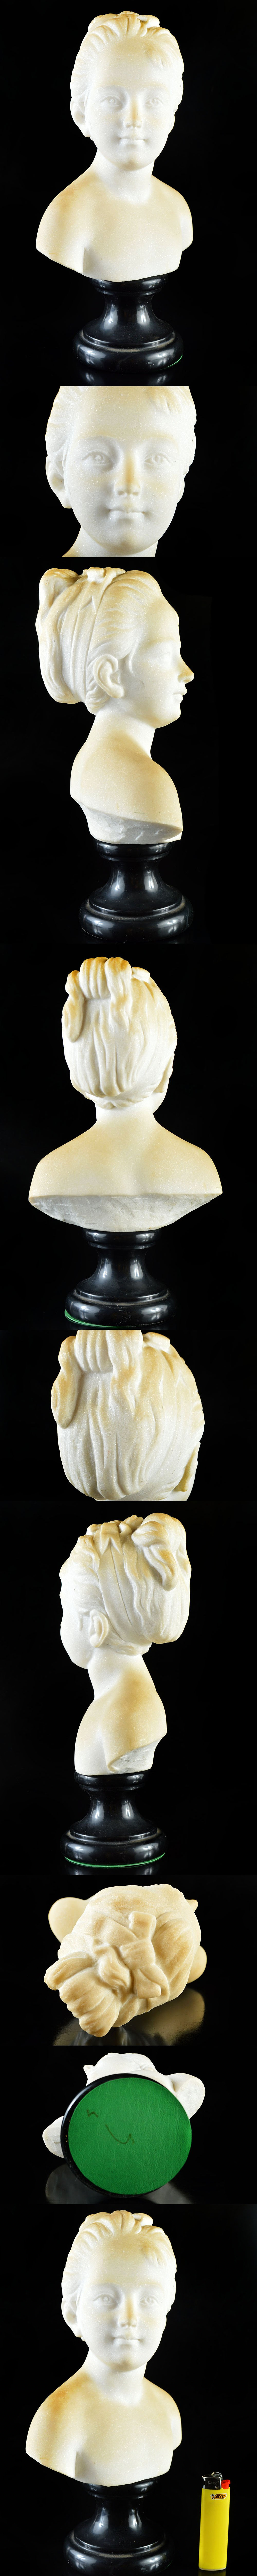 【国産最新作】某名家収蔵品 時代 西洋アンティーク 大理石 石造 女性像 胸像 オブジェ 古美術品(旧家蔵出)A1051 DTDrhea0 西洋彫刻